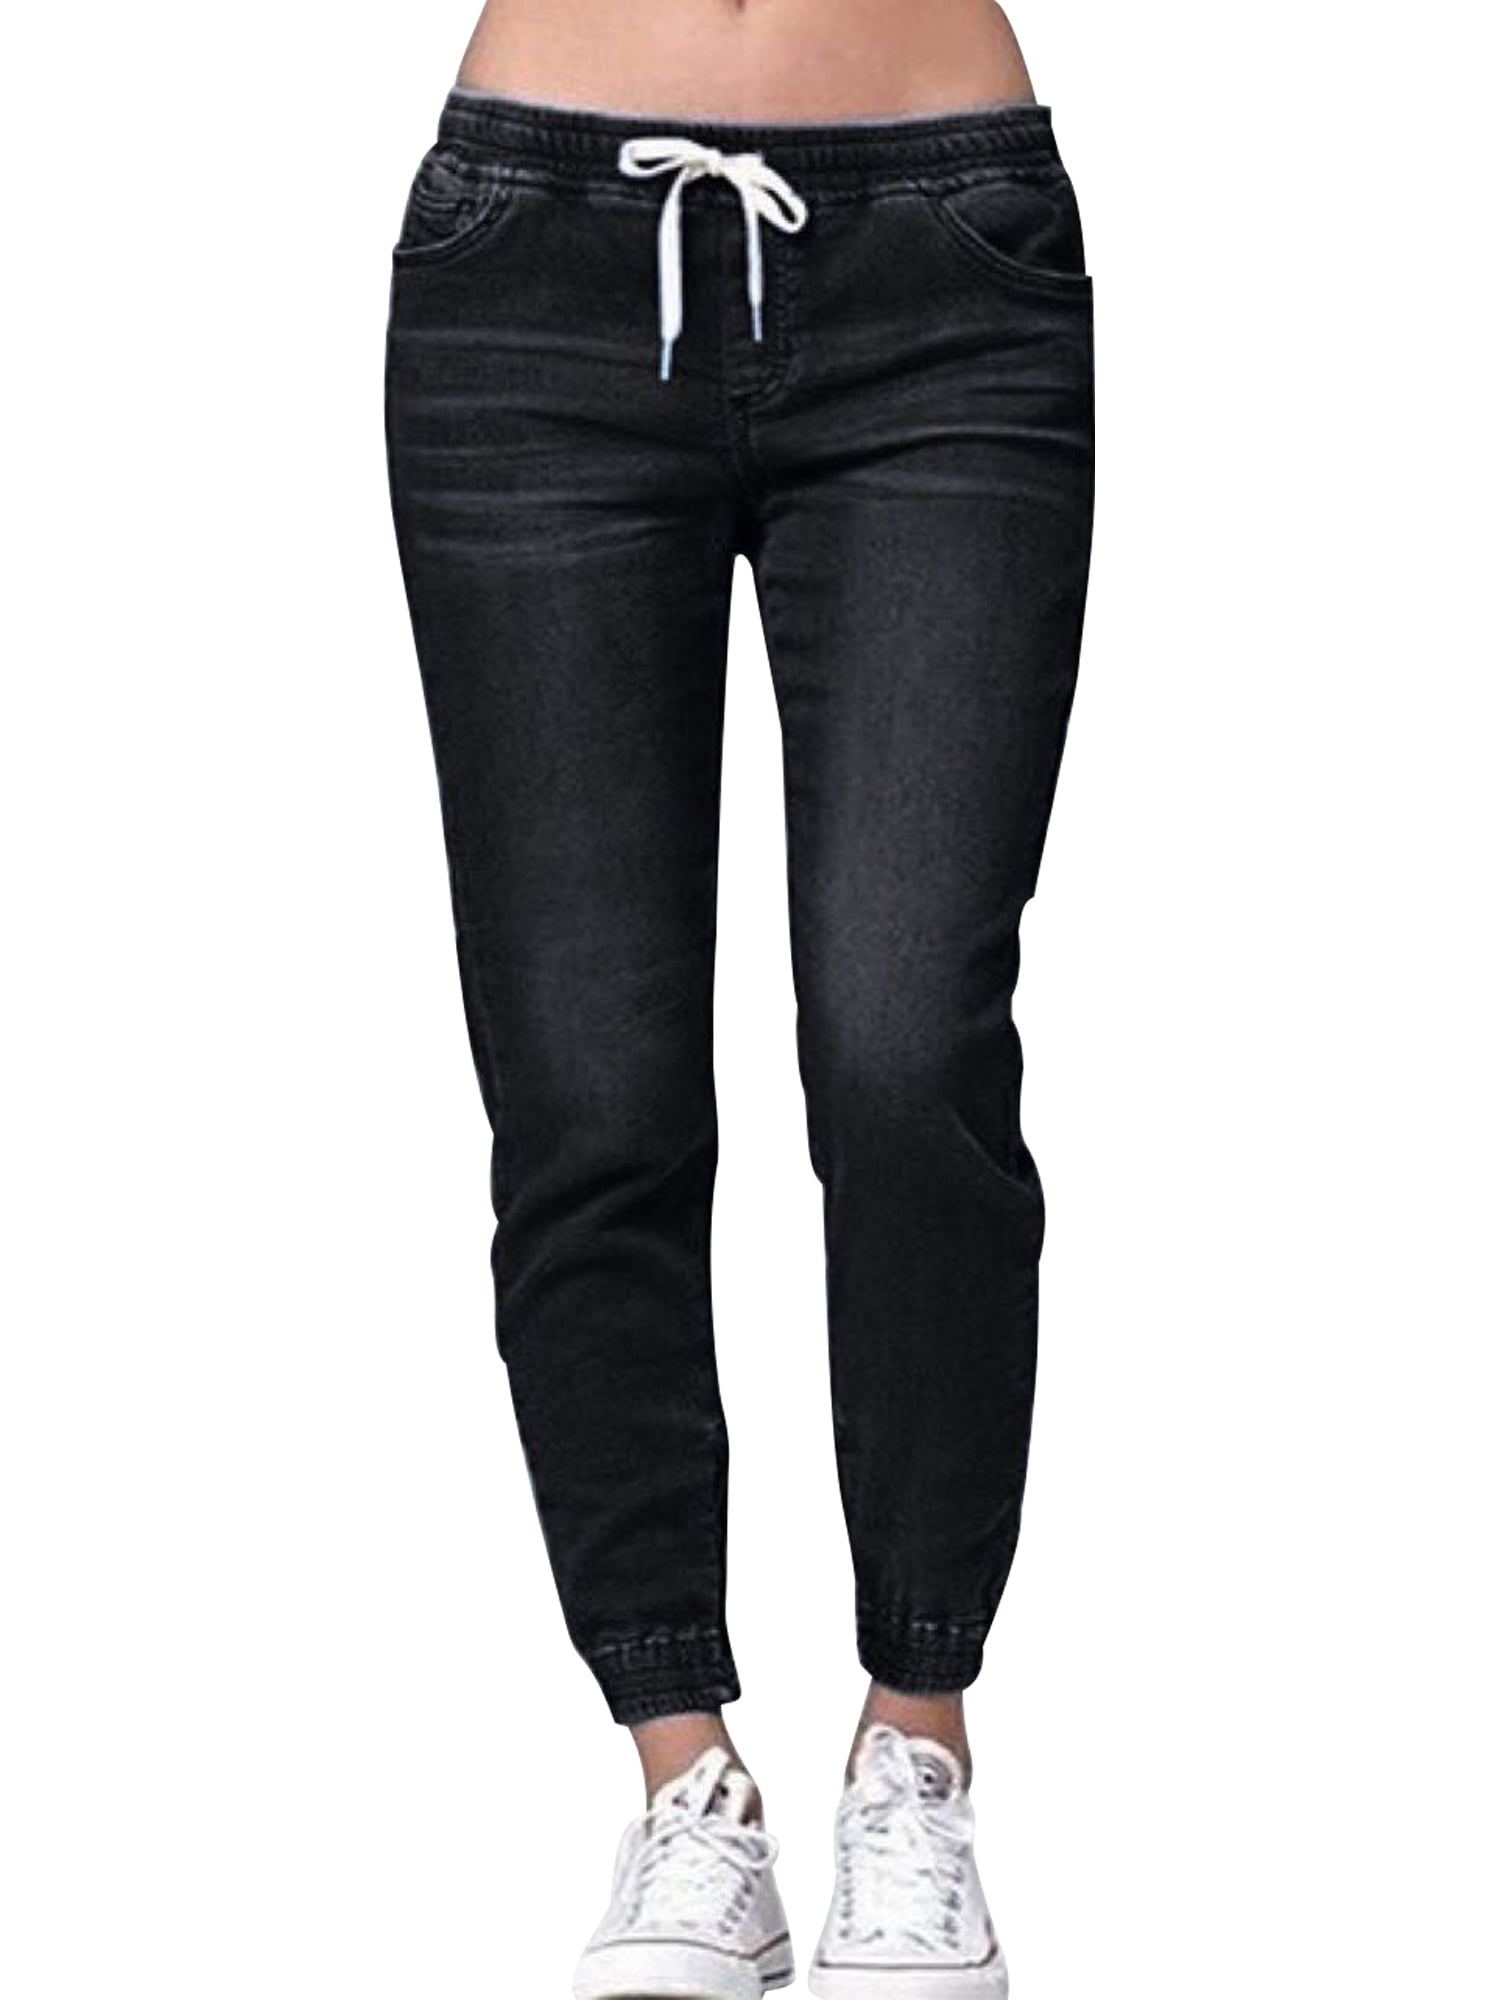 Icena Womens Jeans Fashion Trousers Black Jeans Elastic Waistband Full Loose Denim Pants